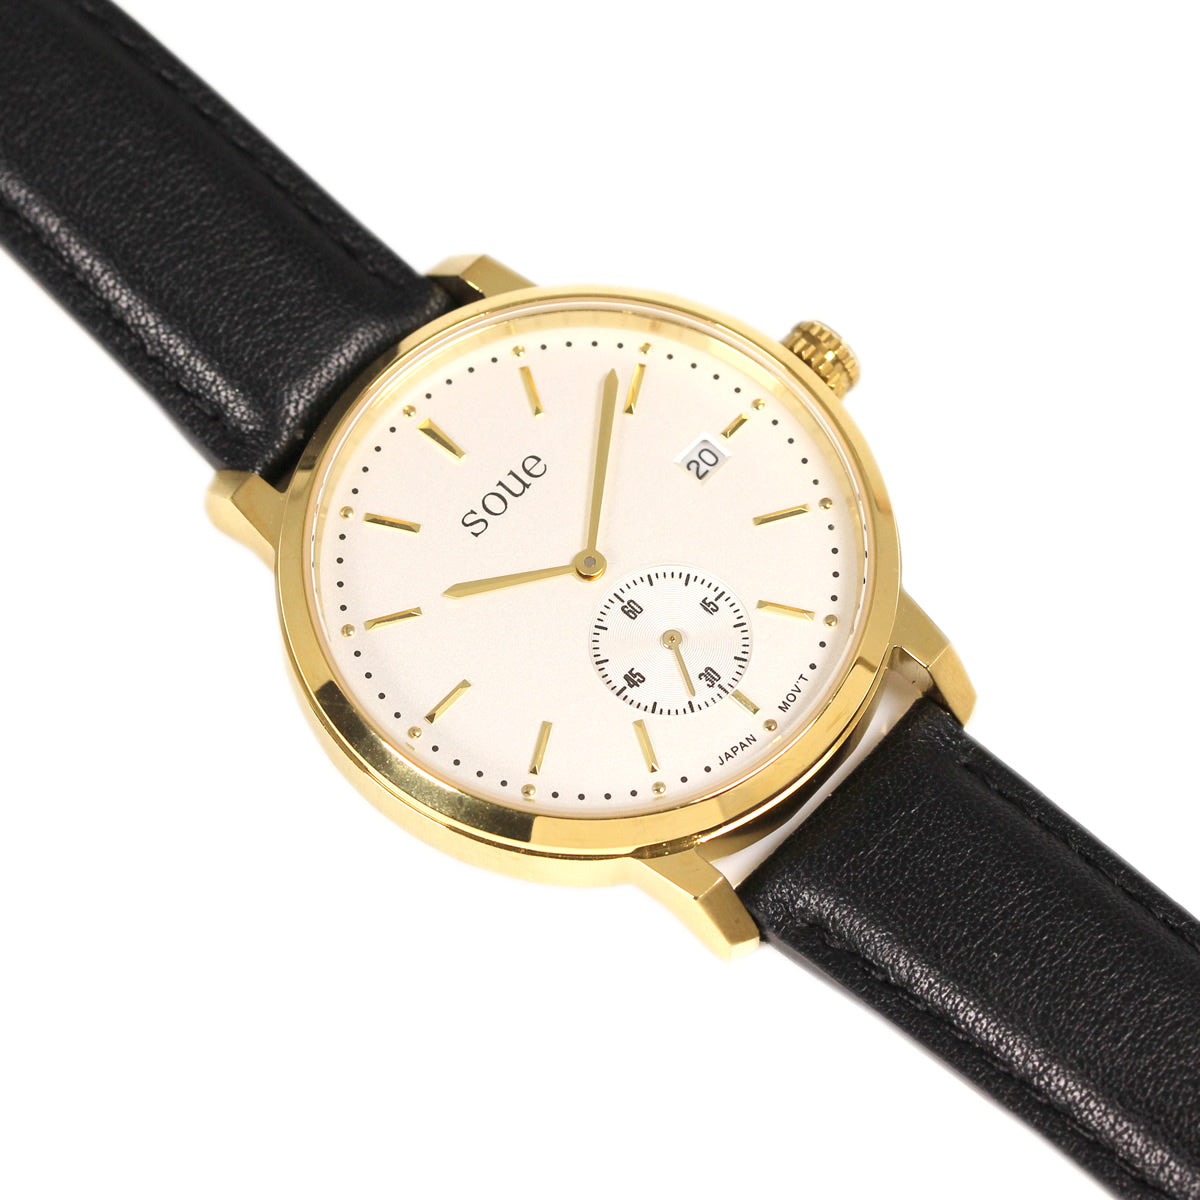 soue classics ペアウォッチ 革ベルト ゴールド×ブラック メンズ/レディース 38mmサイズ 腕時計